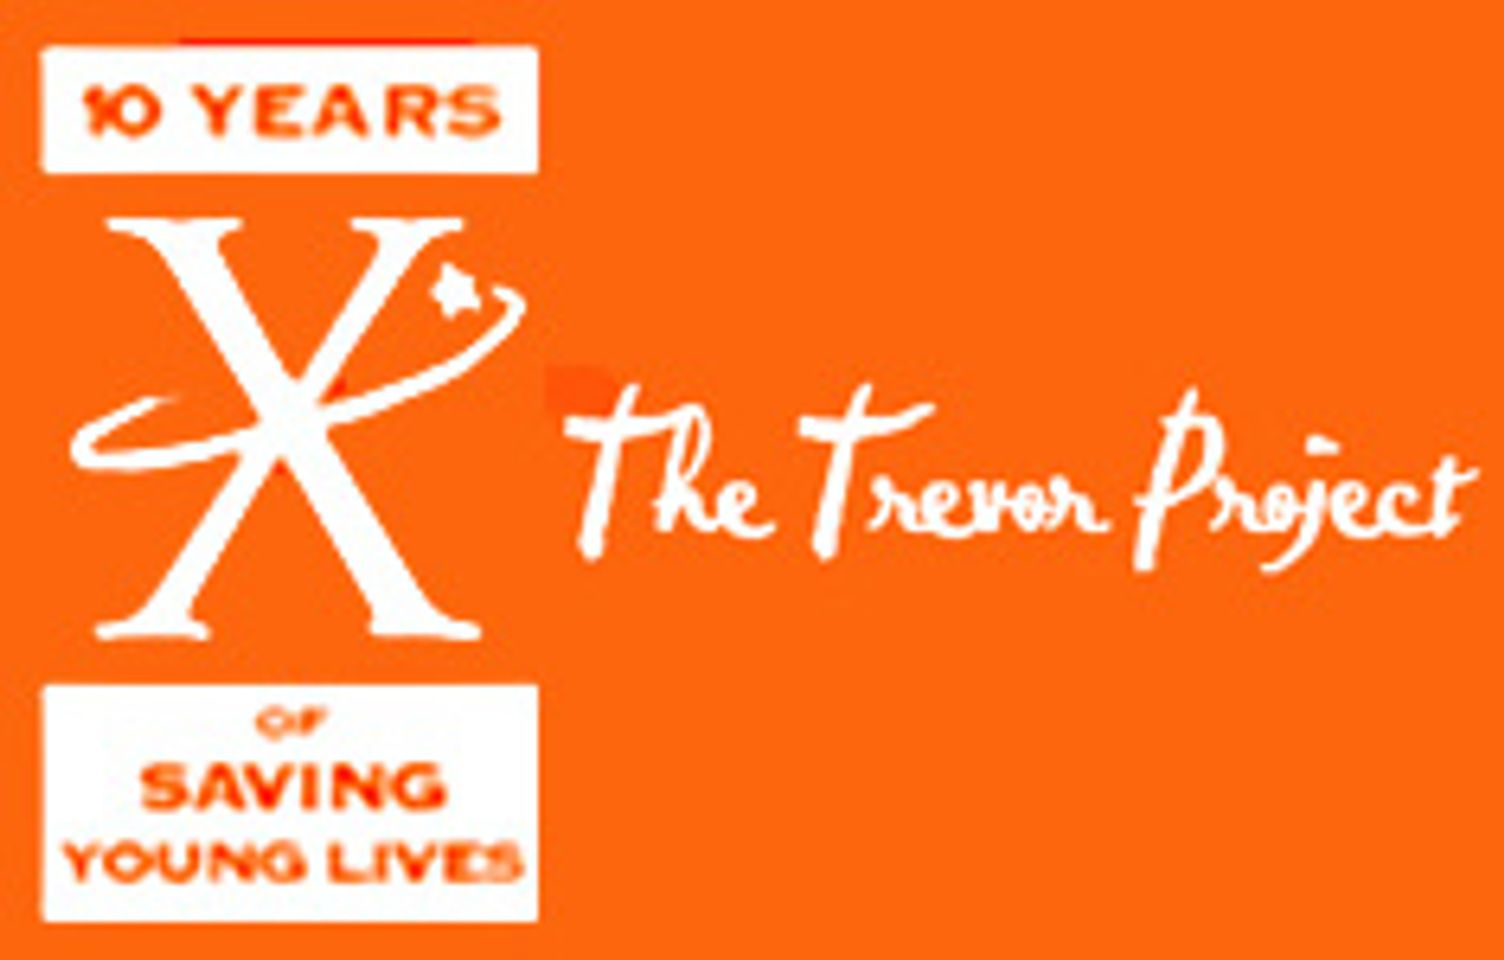 Trevor Project Raises $200K During NY Fundraiser